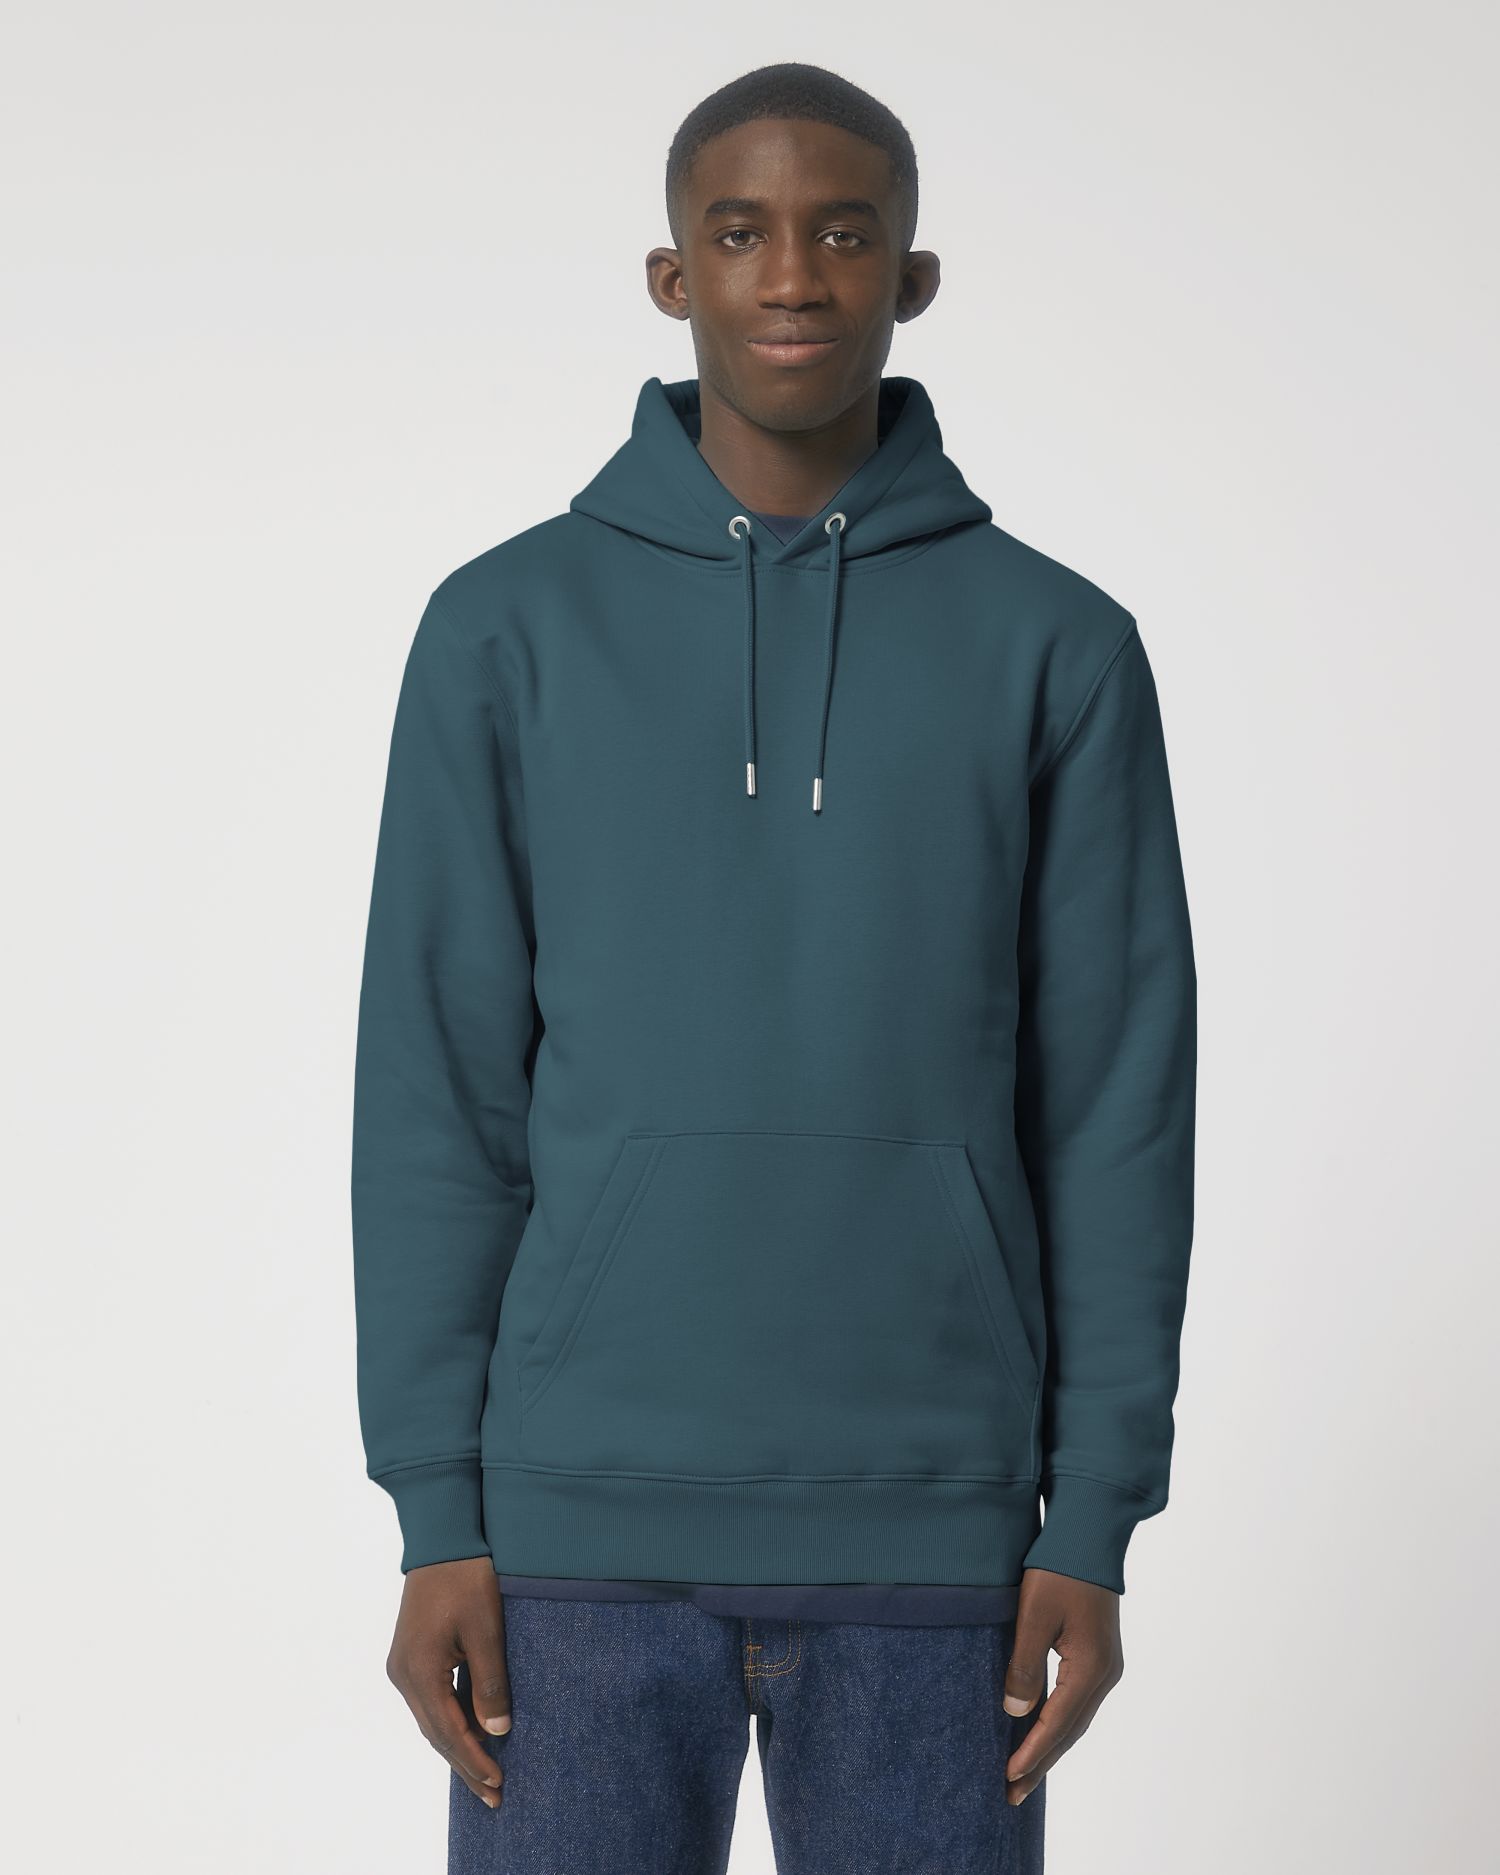 Hoodie sweatshirts Cruiser in Farbe Stargazer